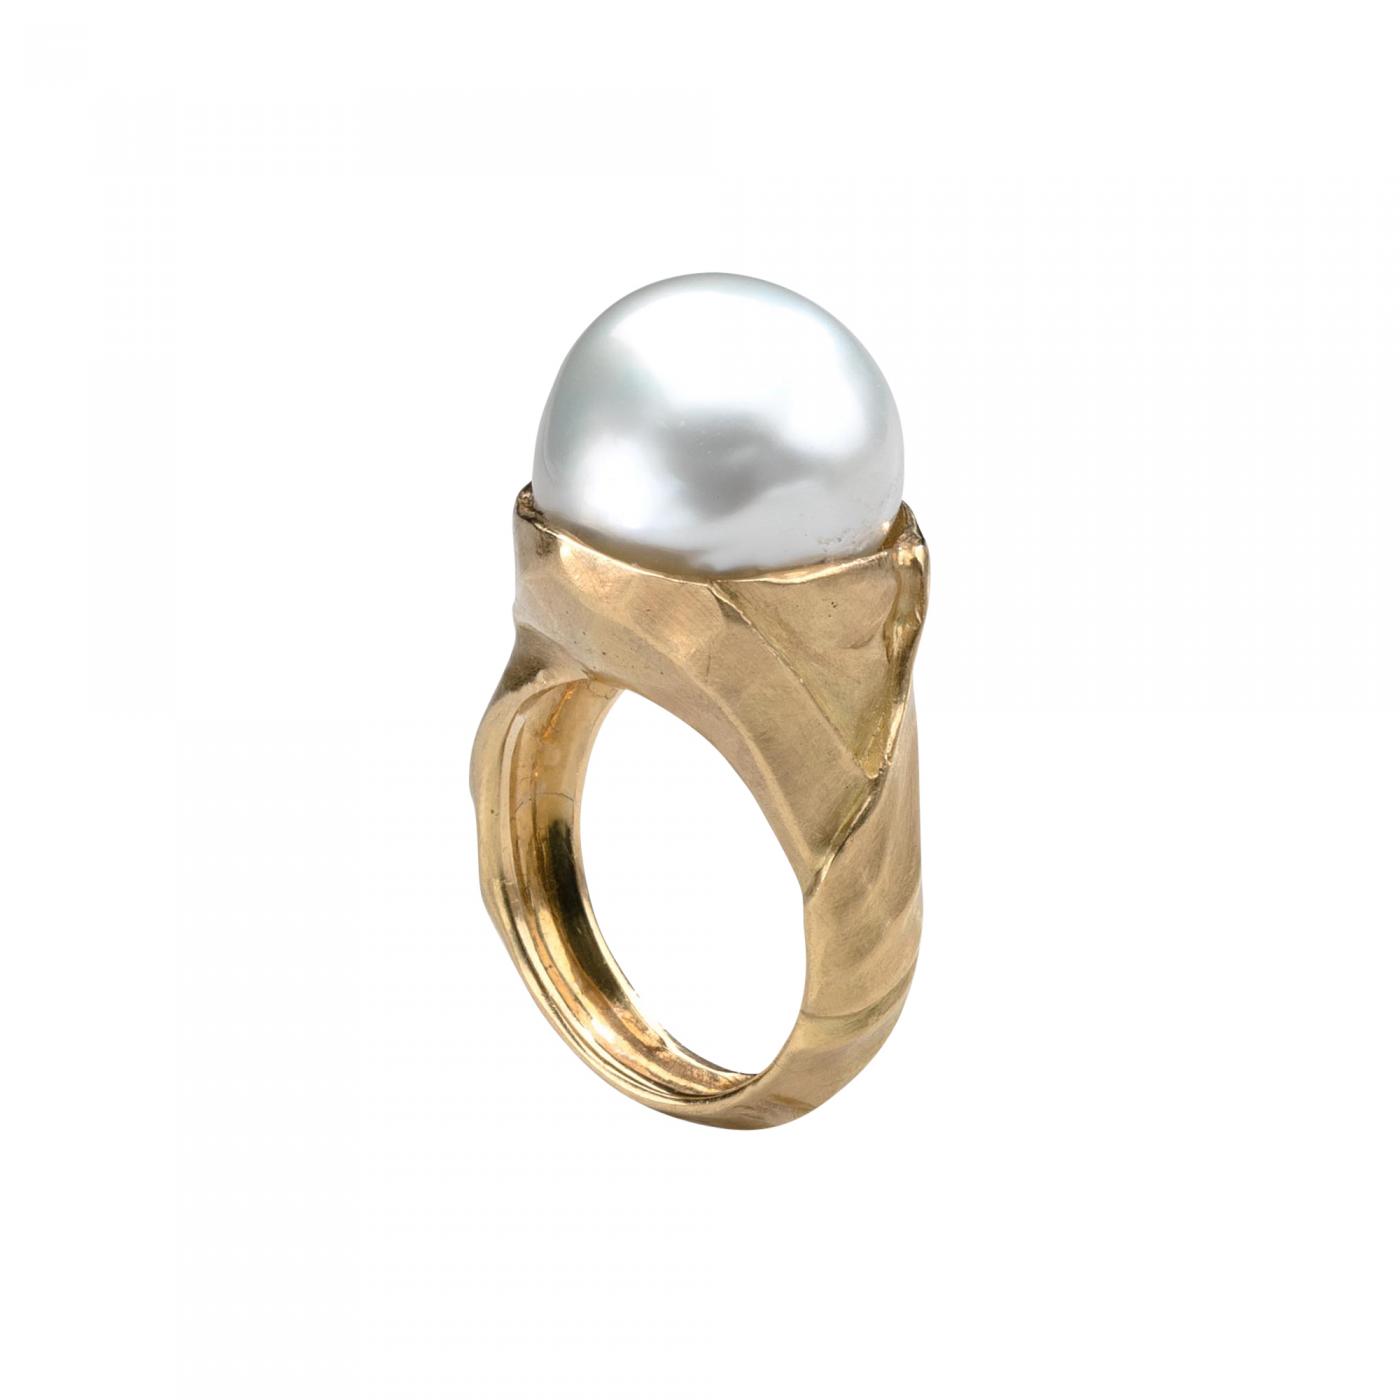 Julius Cohen - Julius Cohen Gold Ring with Pearl